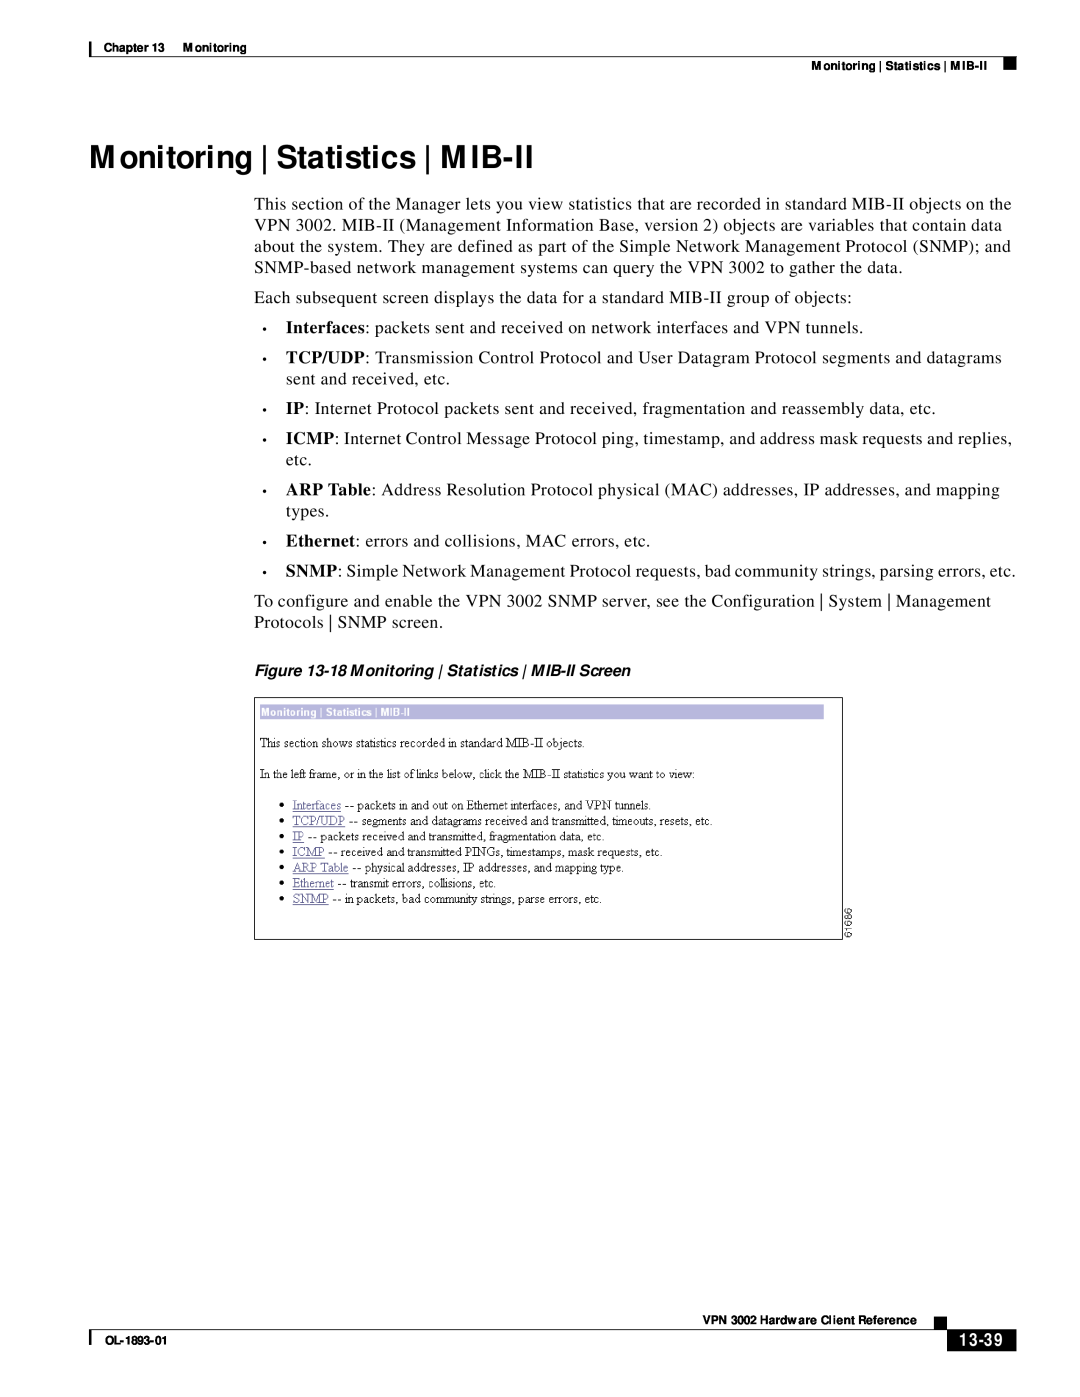 Cisco Systems VPN 3002 manual Monitoring | Statistics | MIB-II, 13-39 